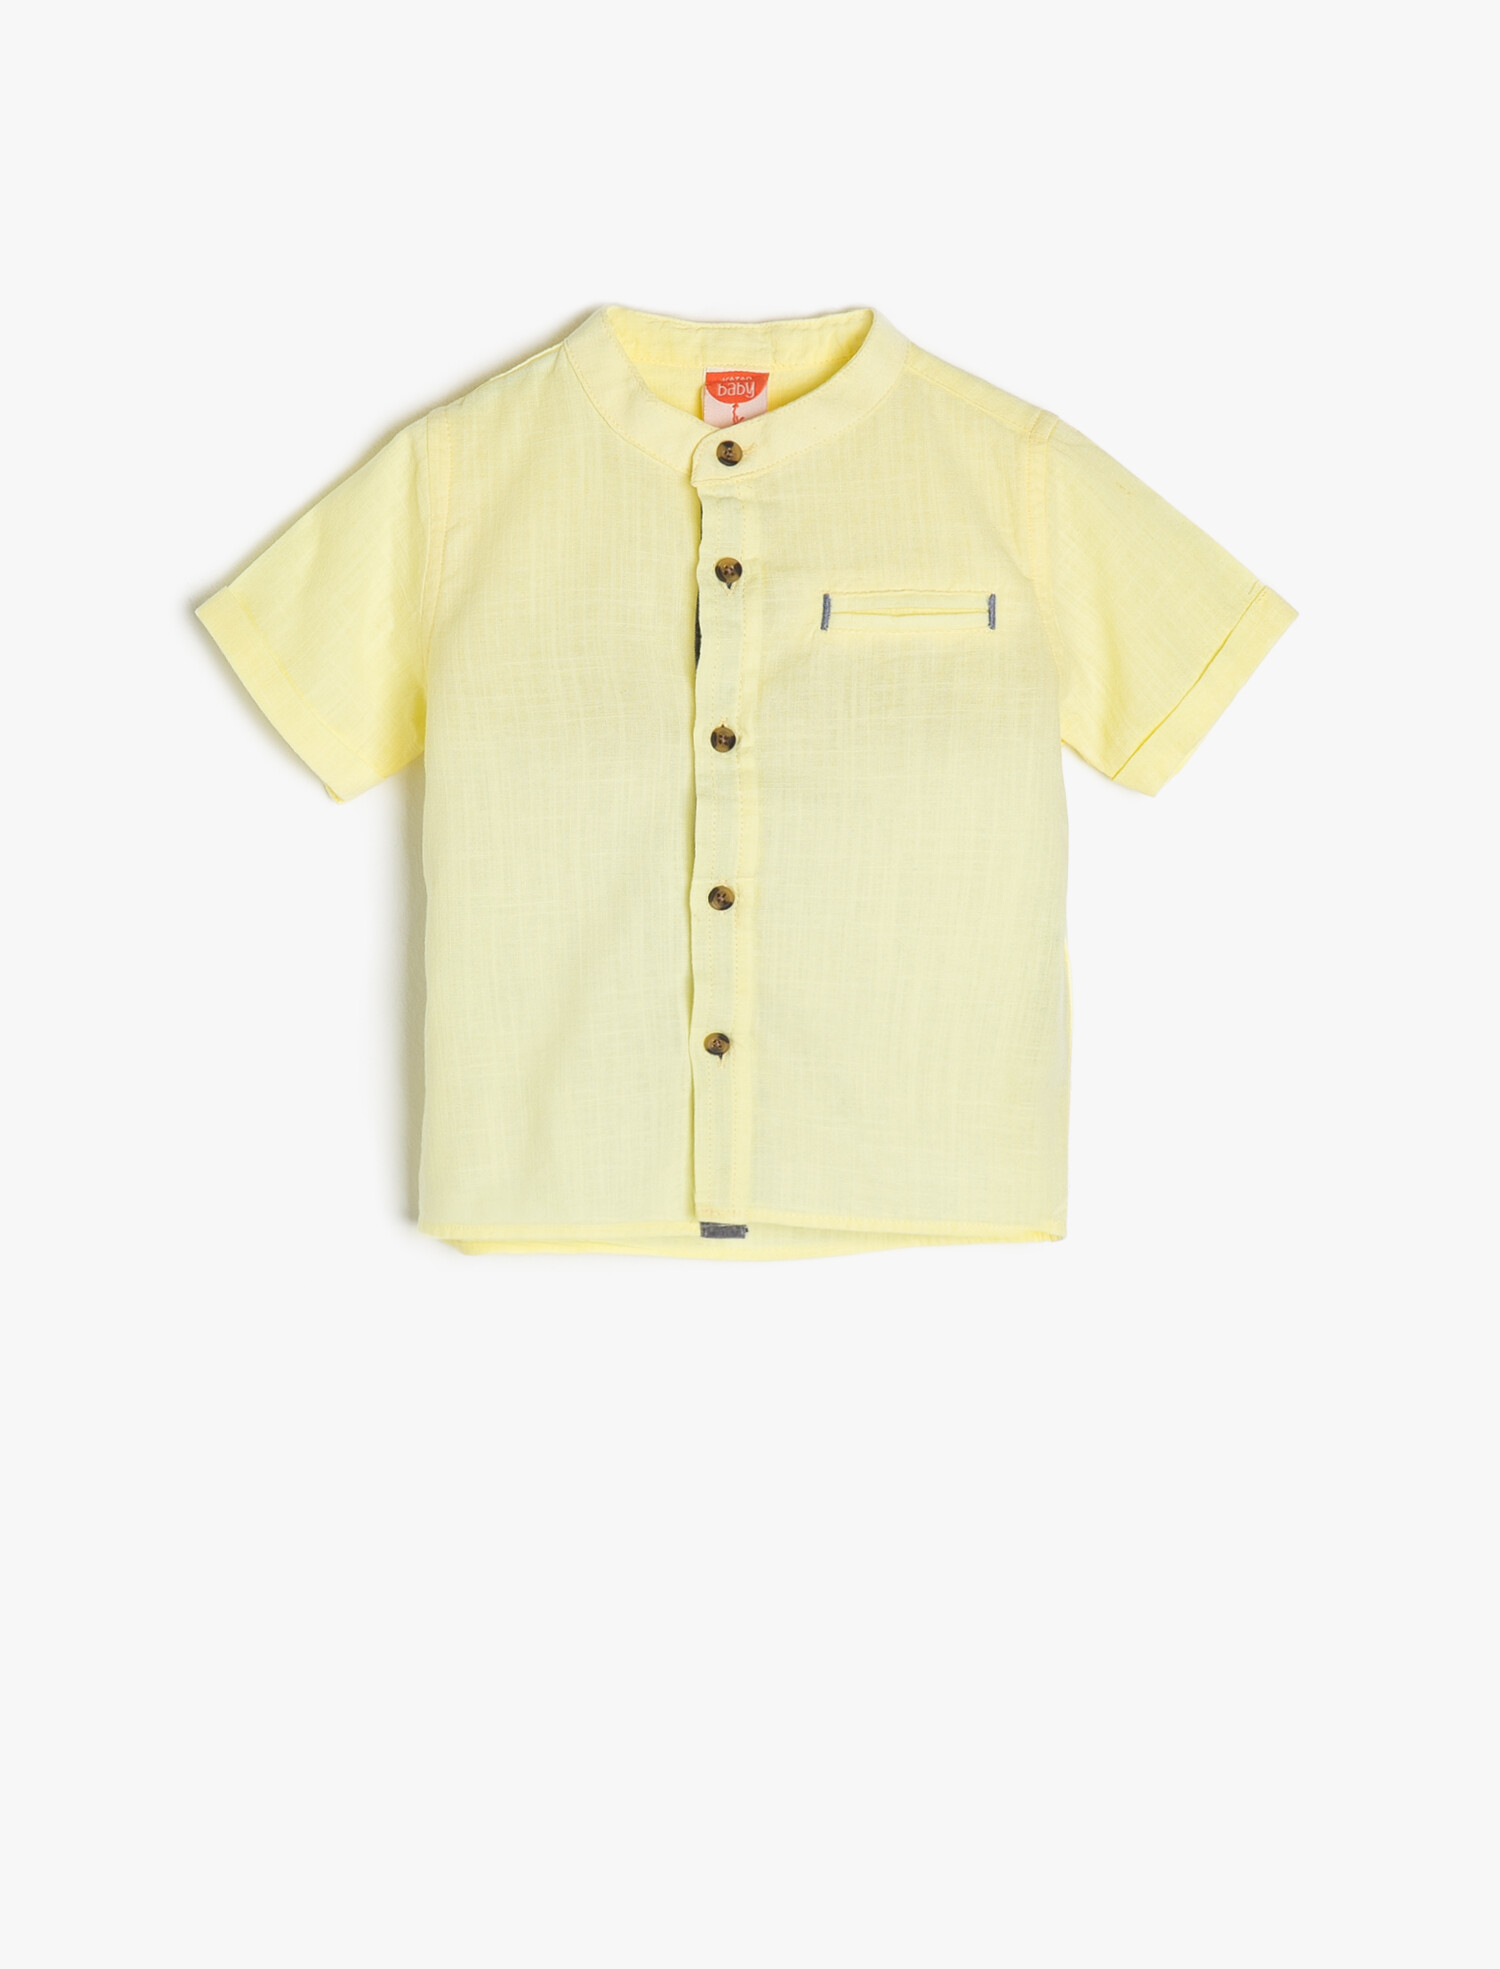 پیراهن پسرانه زیر سه سال لیمویی برند کوتون Koton